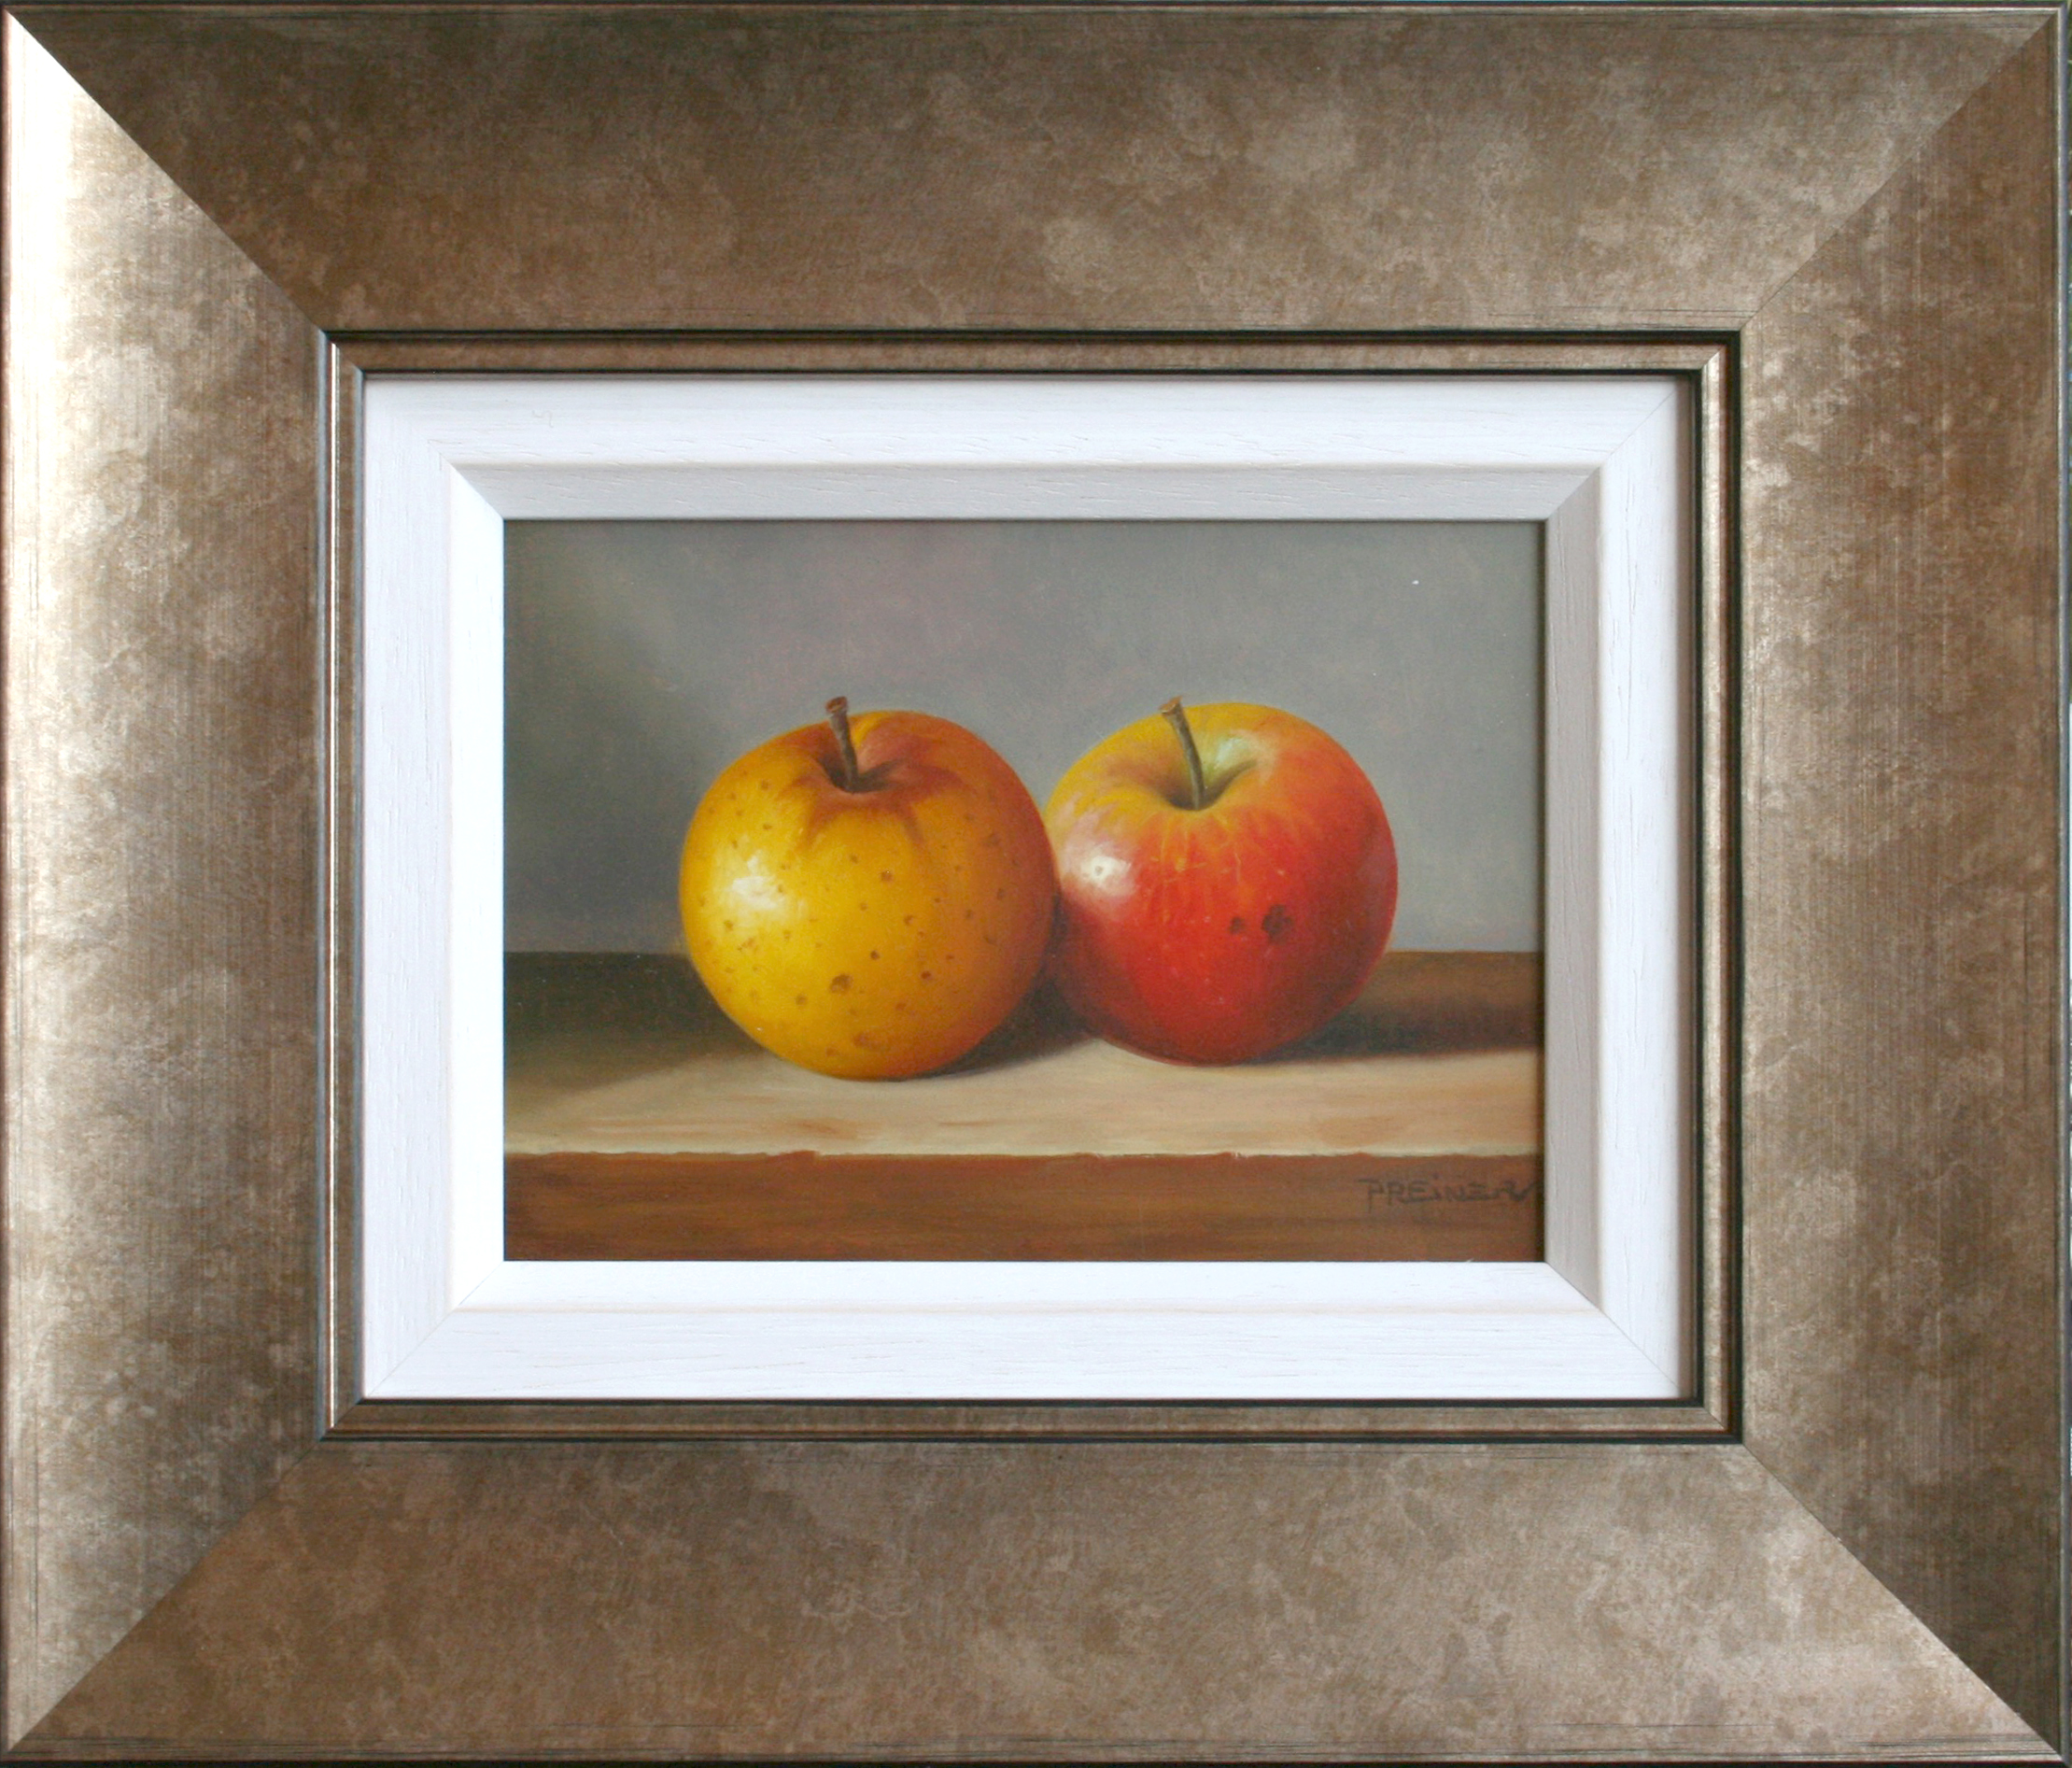 Zoltan Preiner, Original Oil Painting, Still Life with Apples